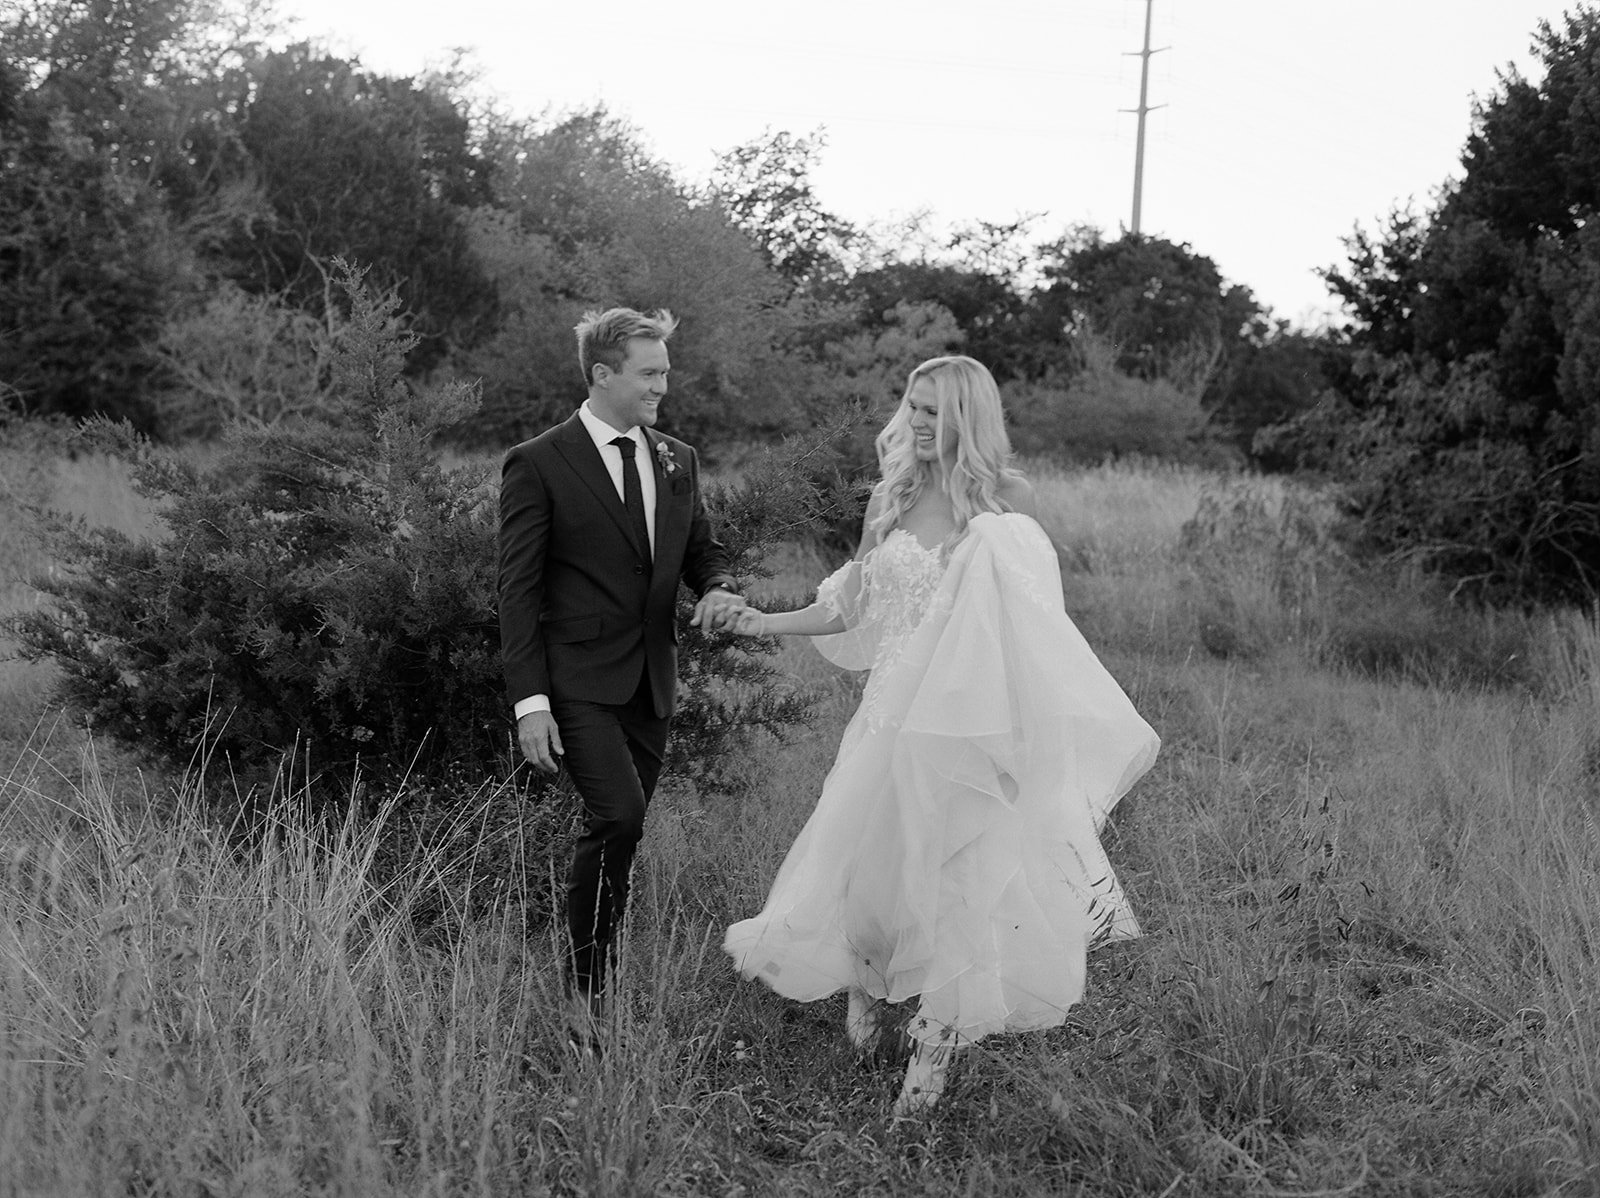 Best-Austin-Wedding-Photographers-Elopement-Film-35mm-Asheville-Santa-Barbara-Backyard-106.jpg